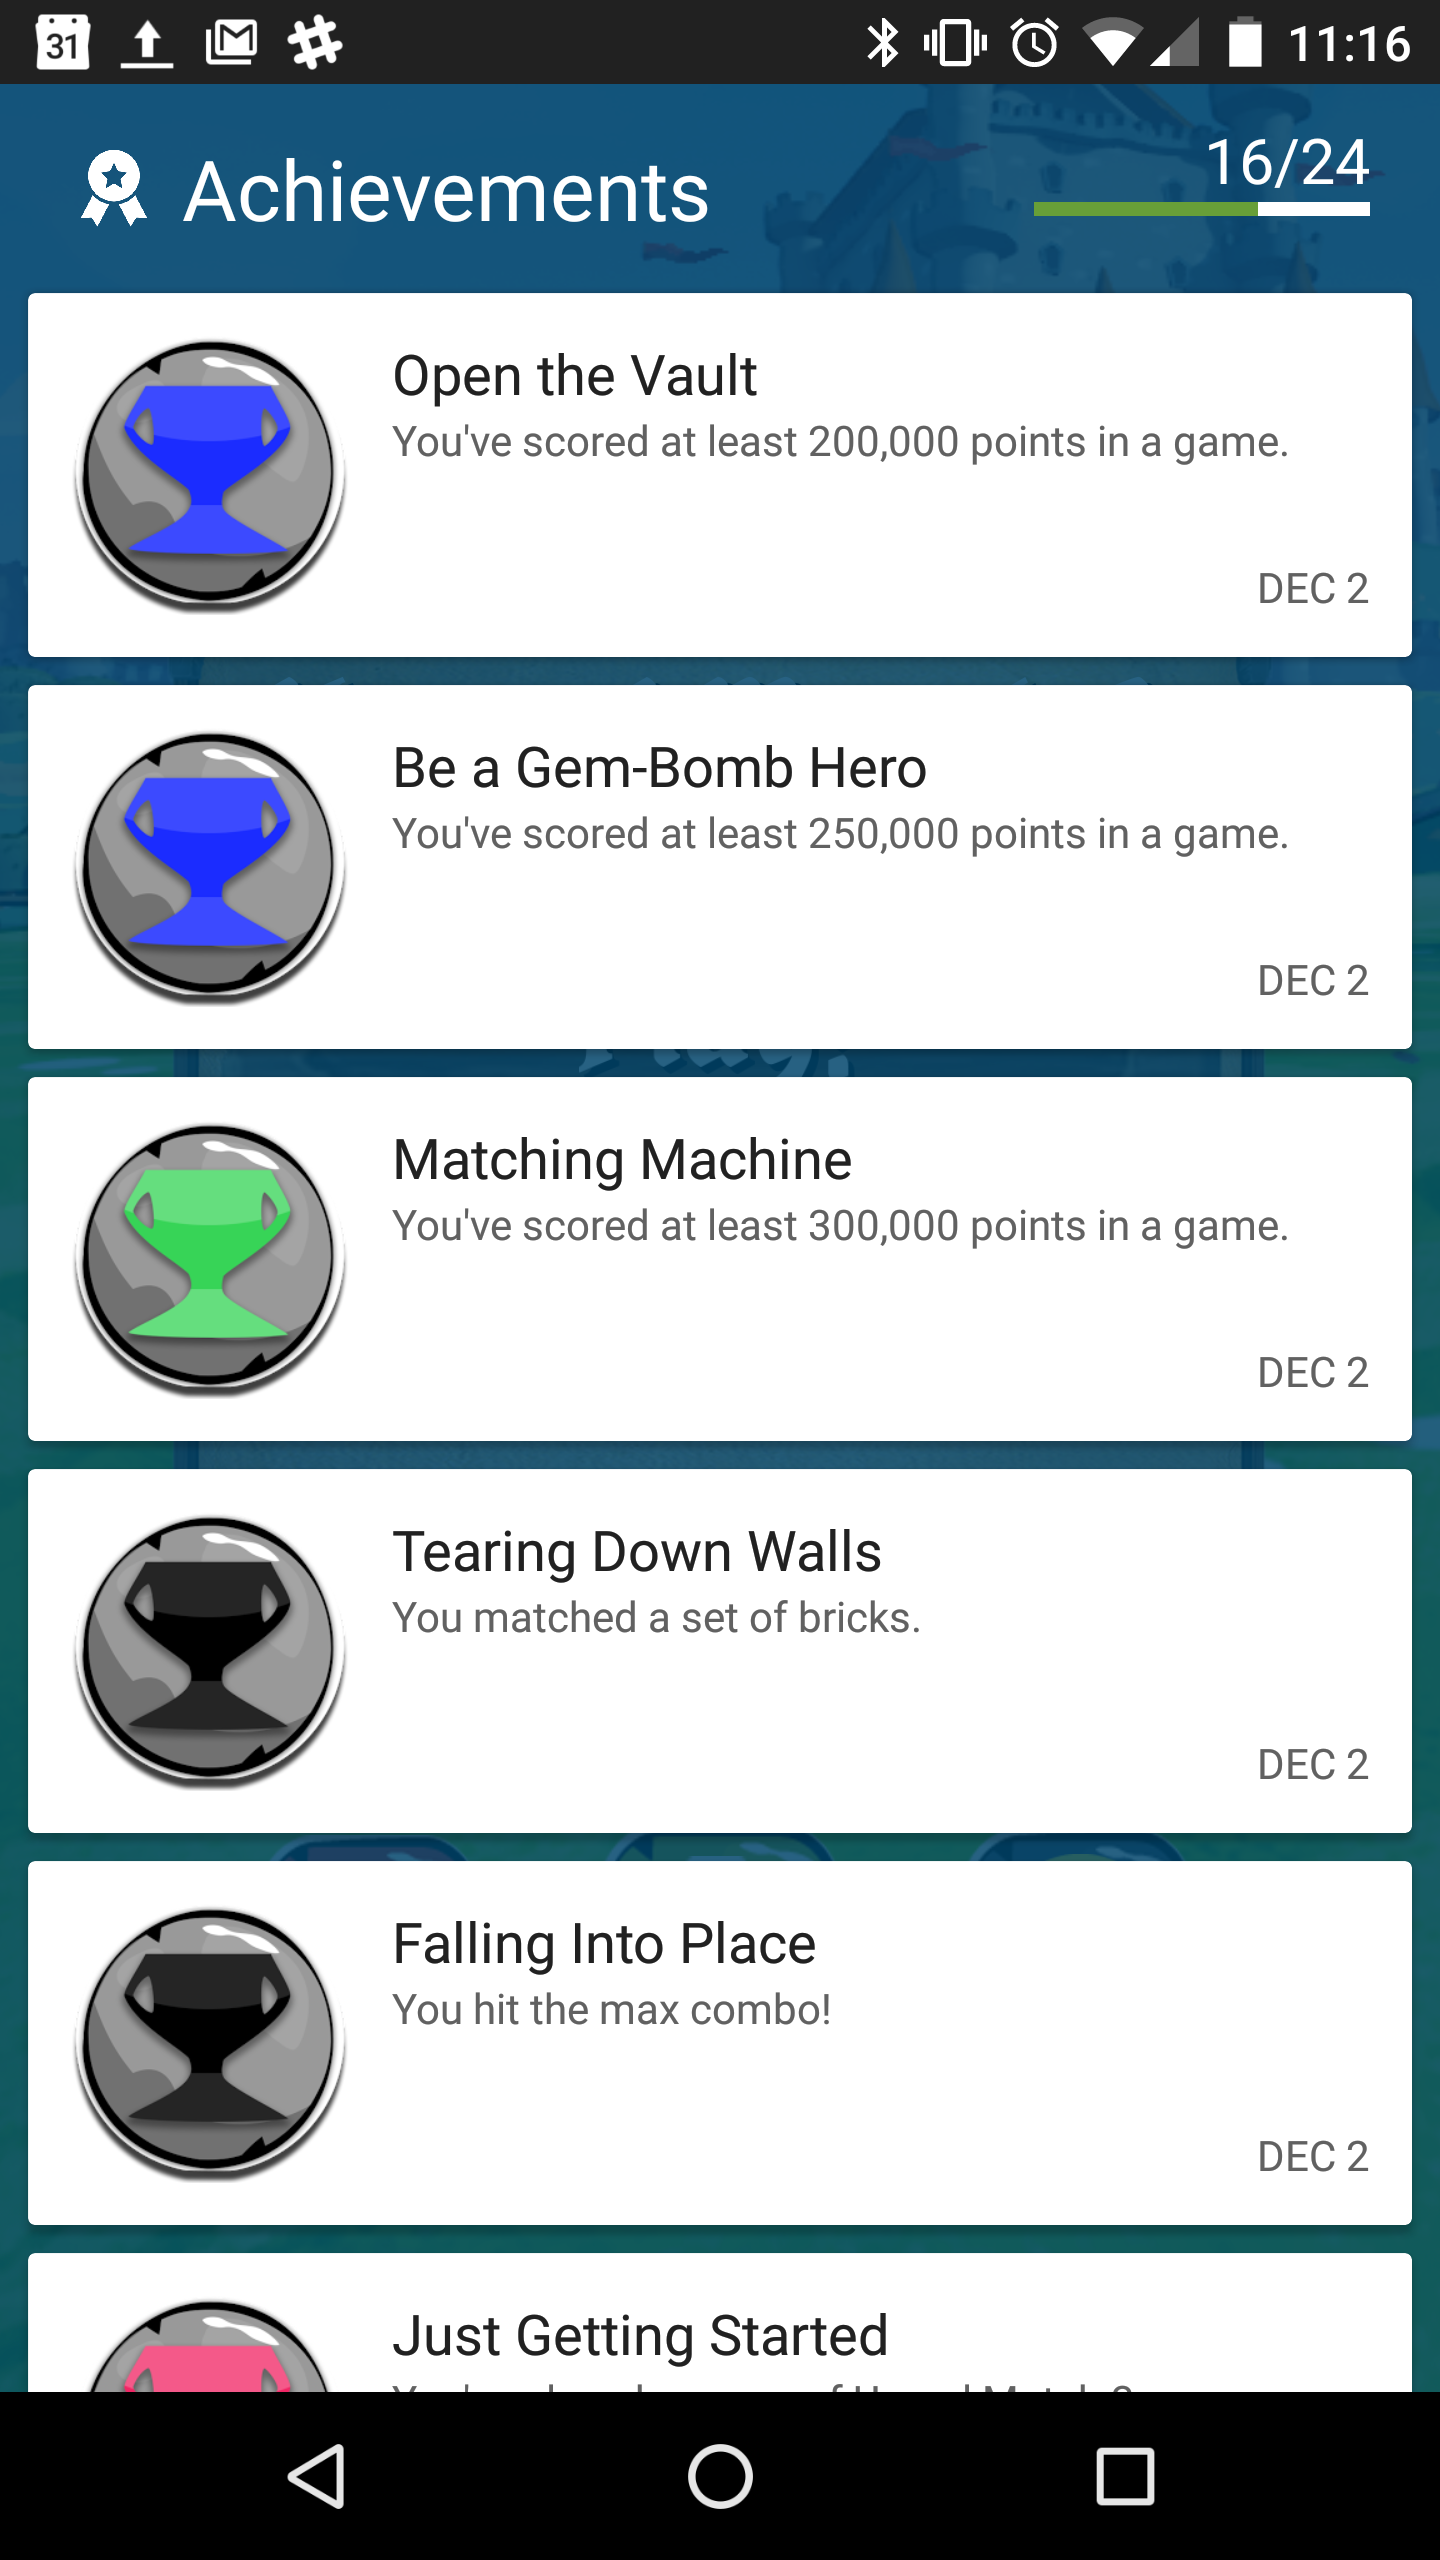 Temple Run 2 Achievements - Google Play 